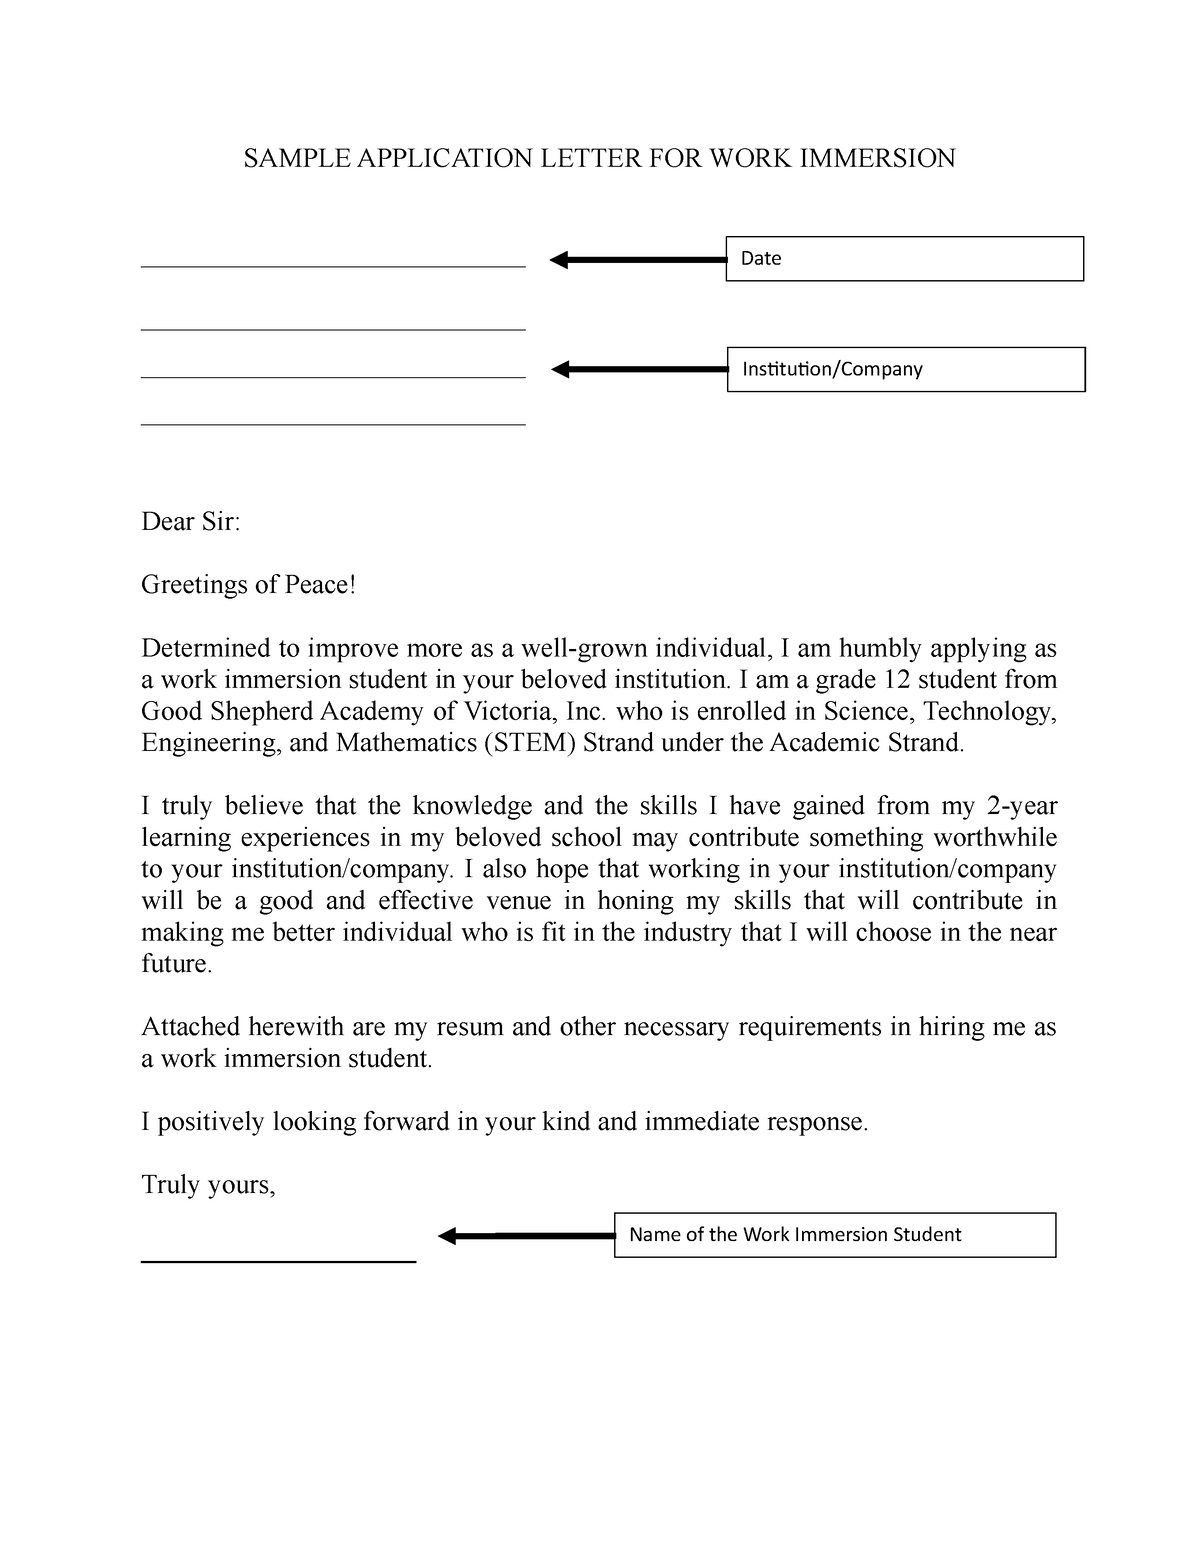 application letter for work immersion student tvl